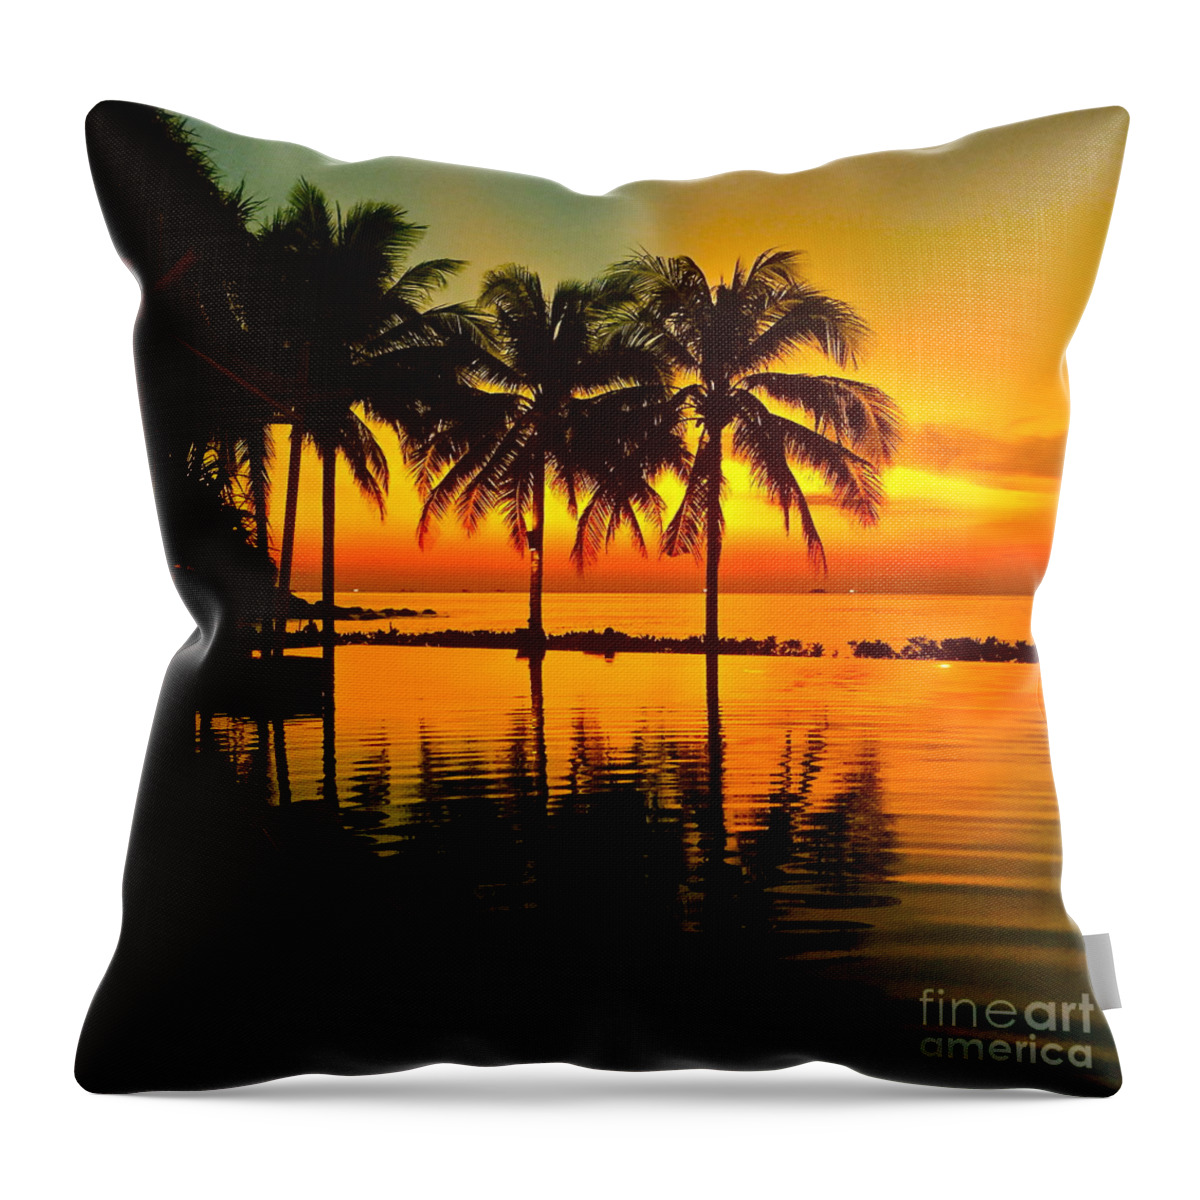 Sunset Throw Pillow featuring the photograph Sunset by Dorota Nowak